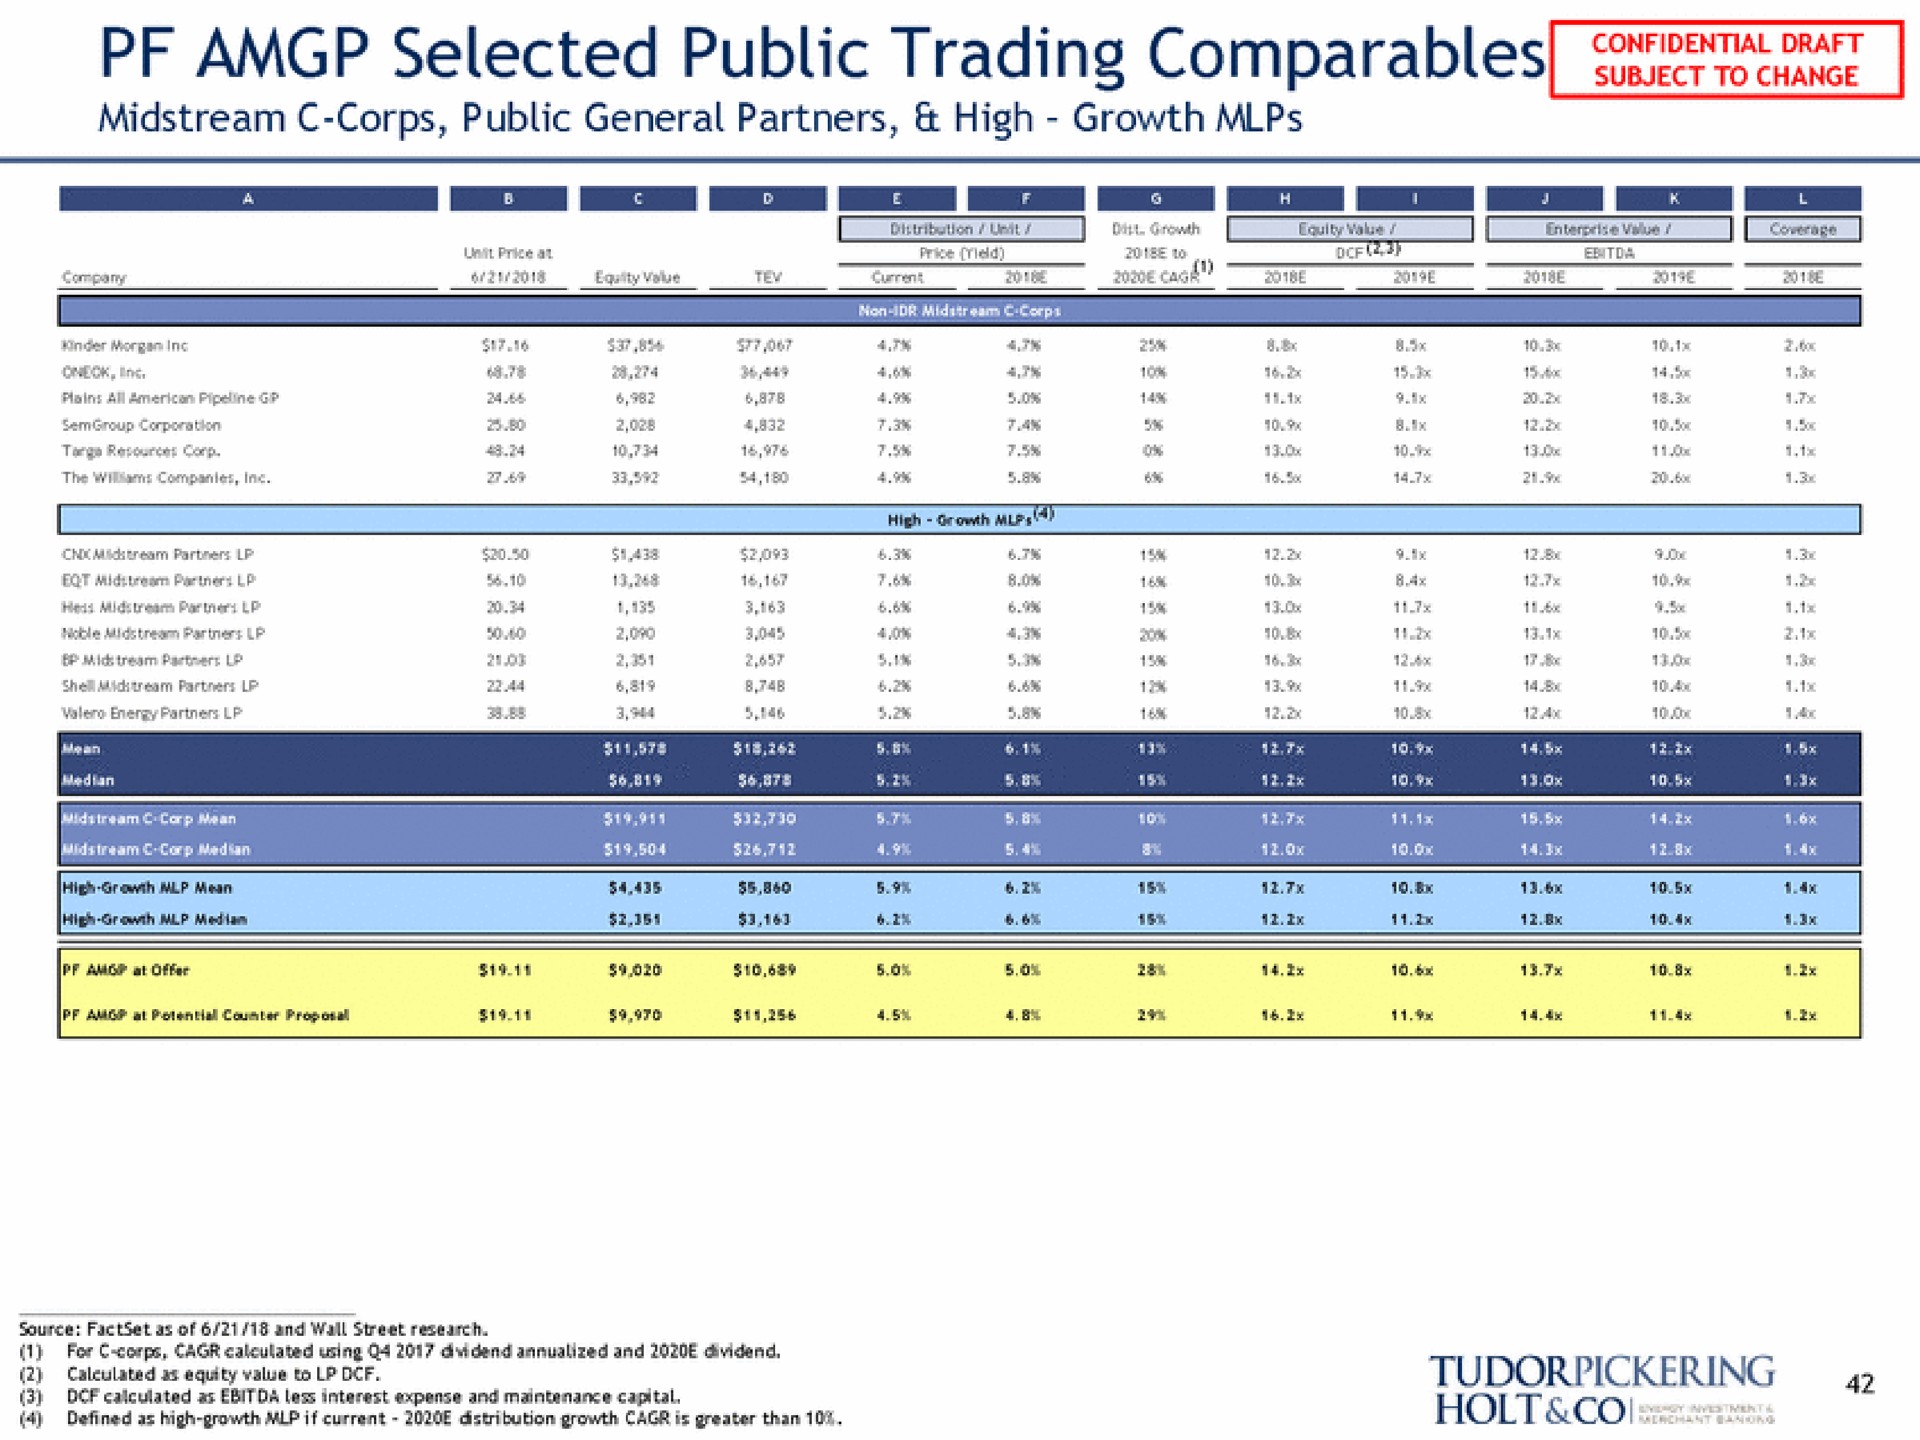 selected public trading core | Tudor, Pickering, Holt & Co